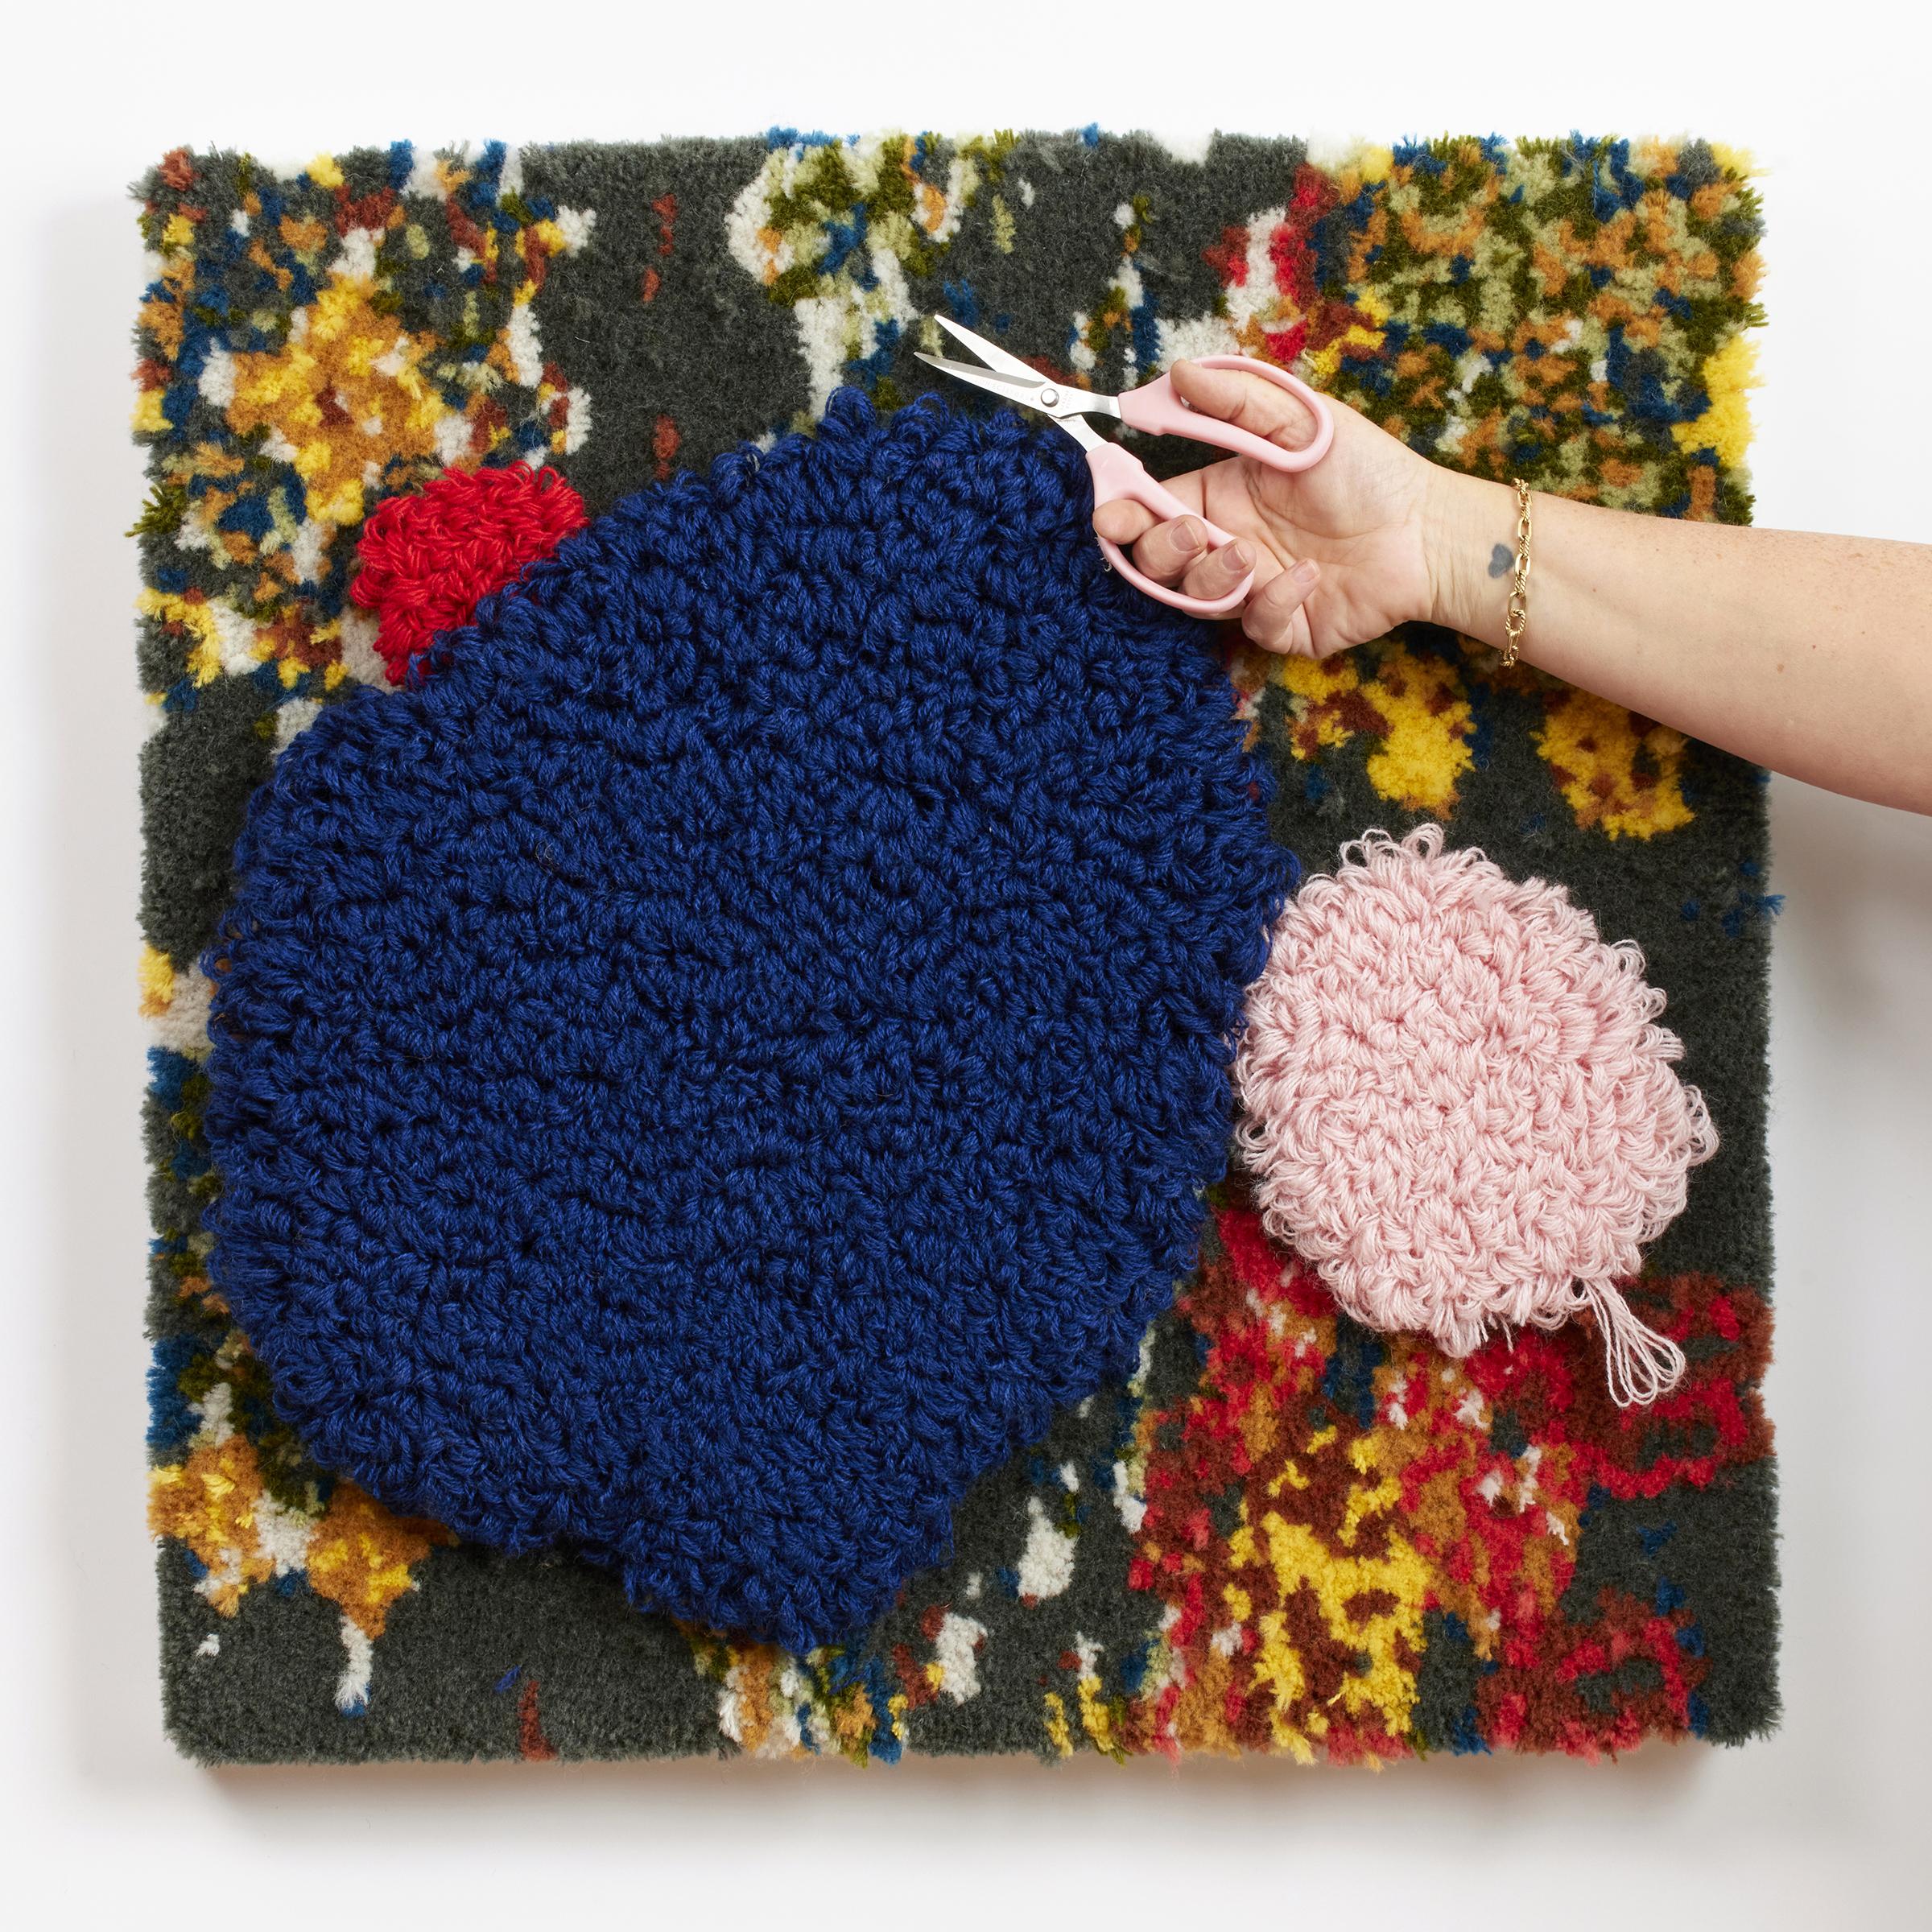 'Boom, Boom, Boom' - contemporary fiber art, texture, pattern, dots, tufting - Abstract Mixed Media Art by Trish Andersen